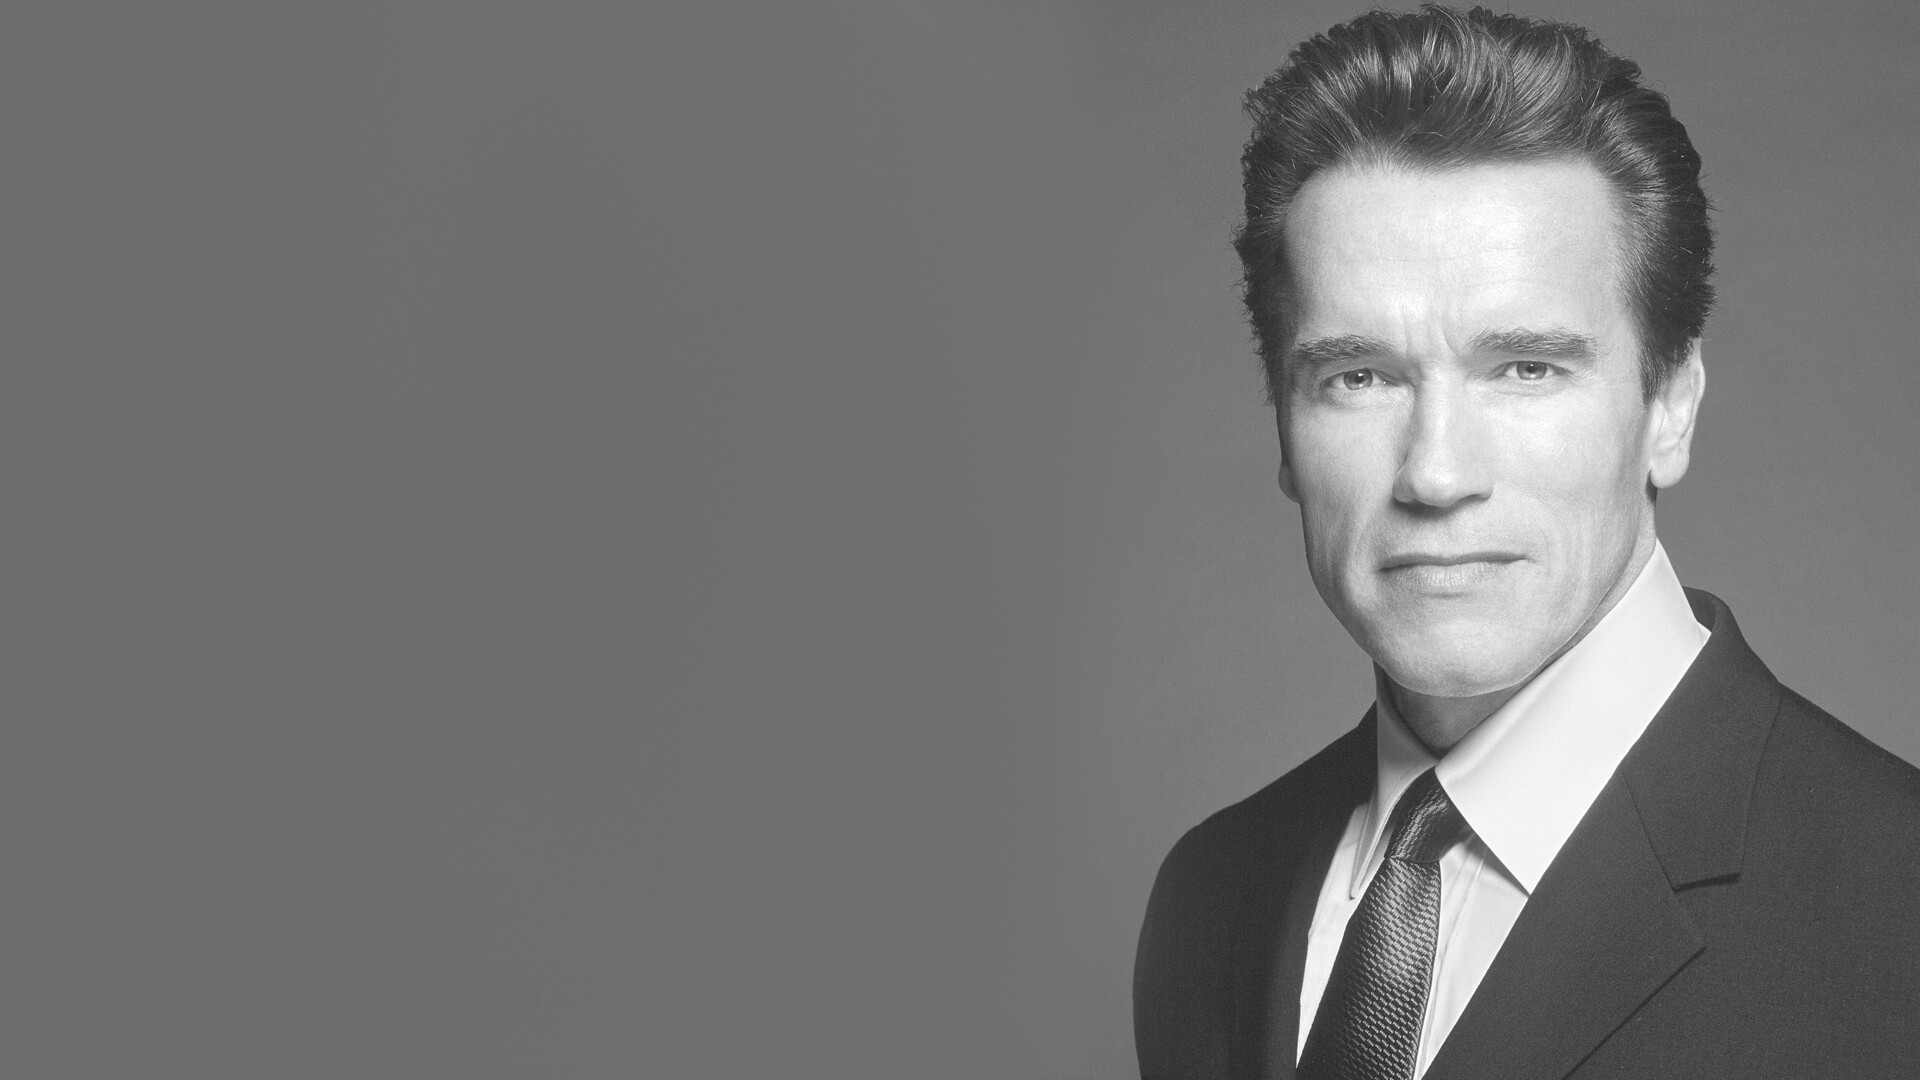 Arnold Schwarzenegger: Played Julius Benedict in a 1988 American buddy comedy film, Twins. 1920x1080 Full HD Wallpaper.